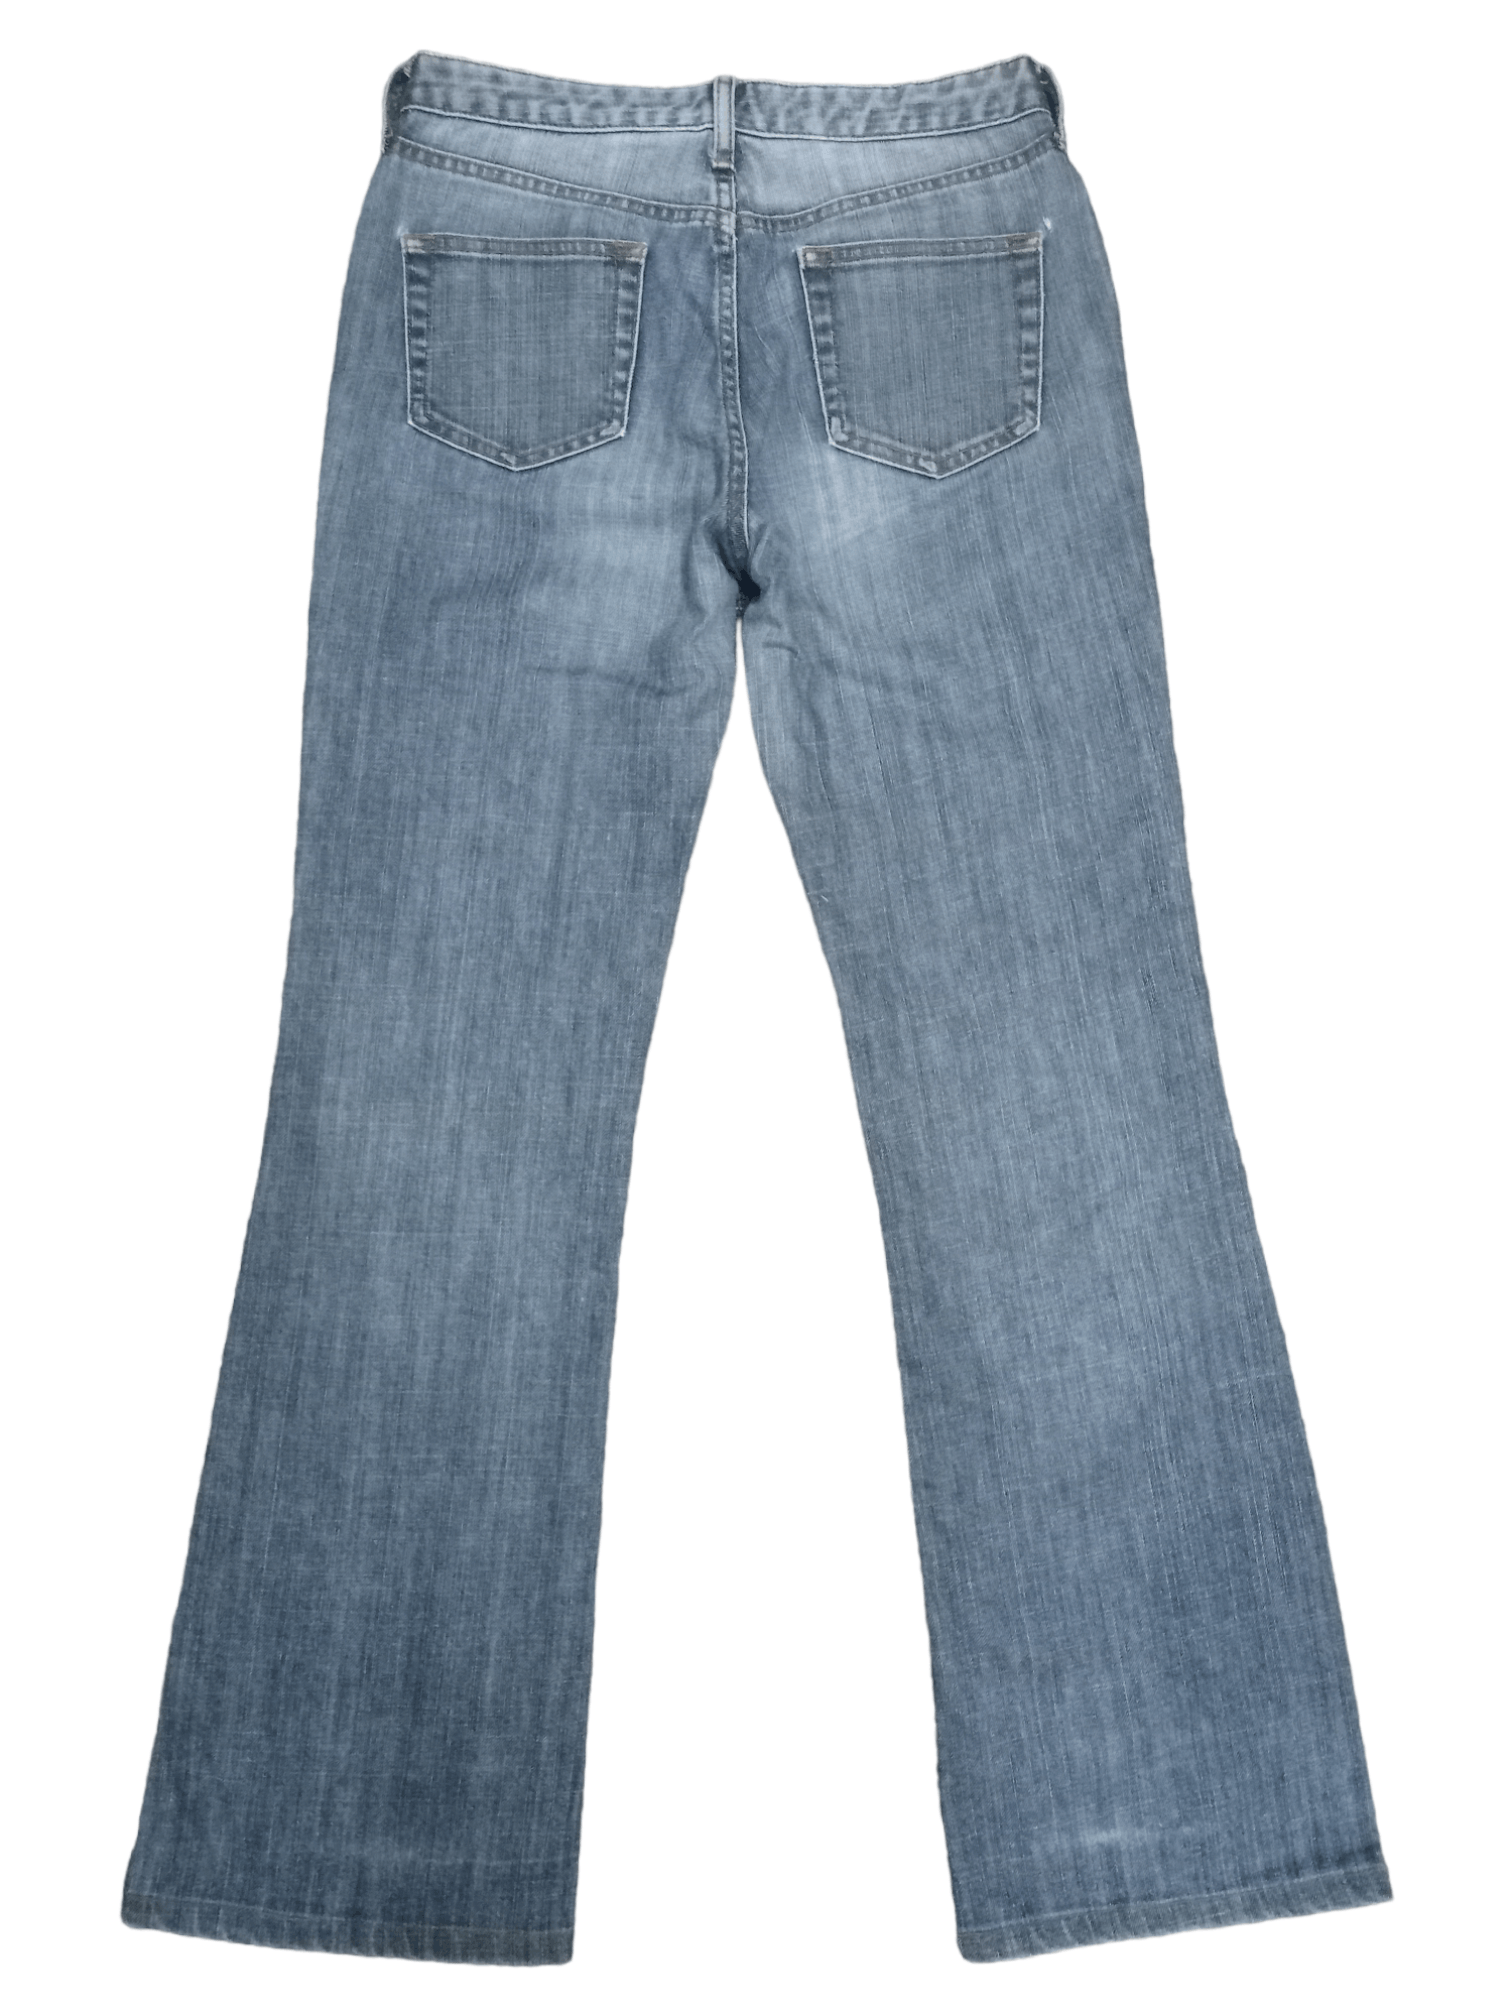 Uniqlo Vintage Japanese Uniqlo Blue Wash Flare Jeans 27x29 Size US 27 - 2 Preview